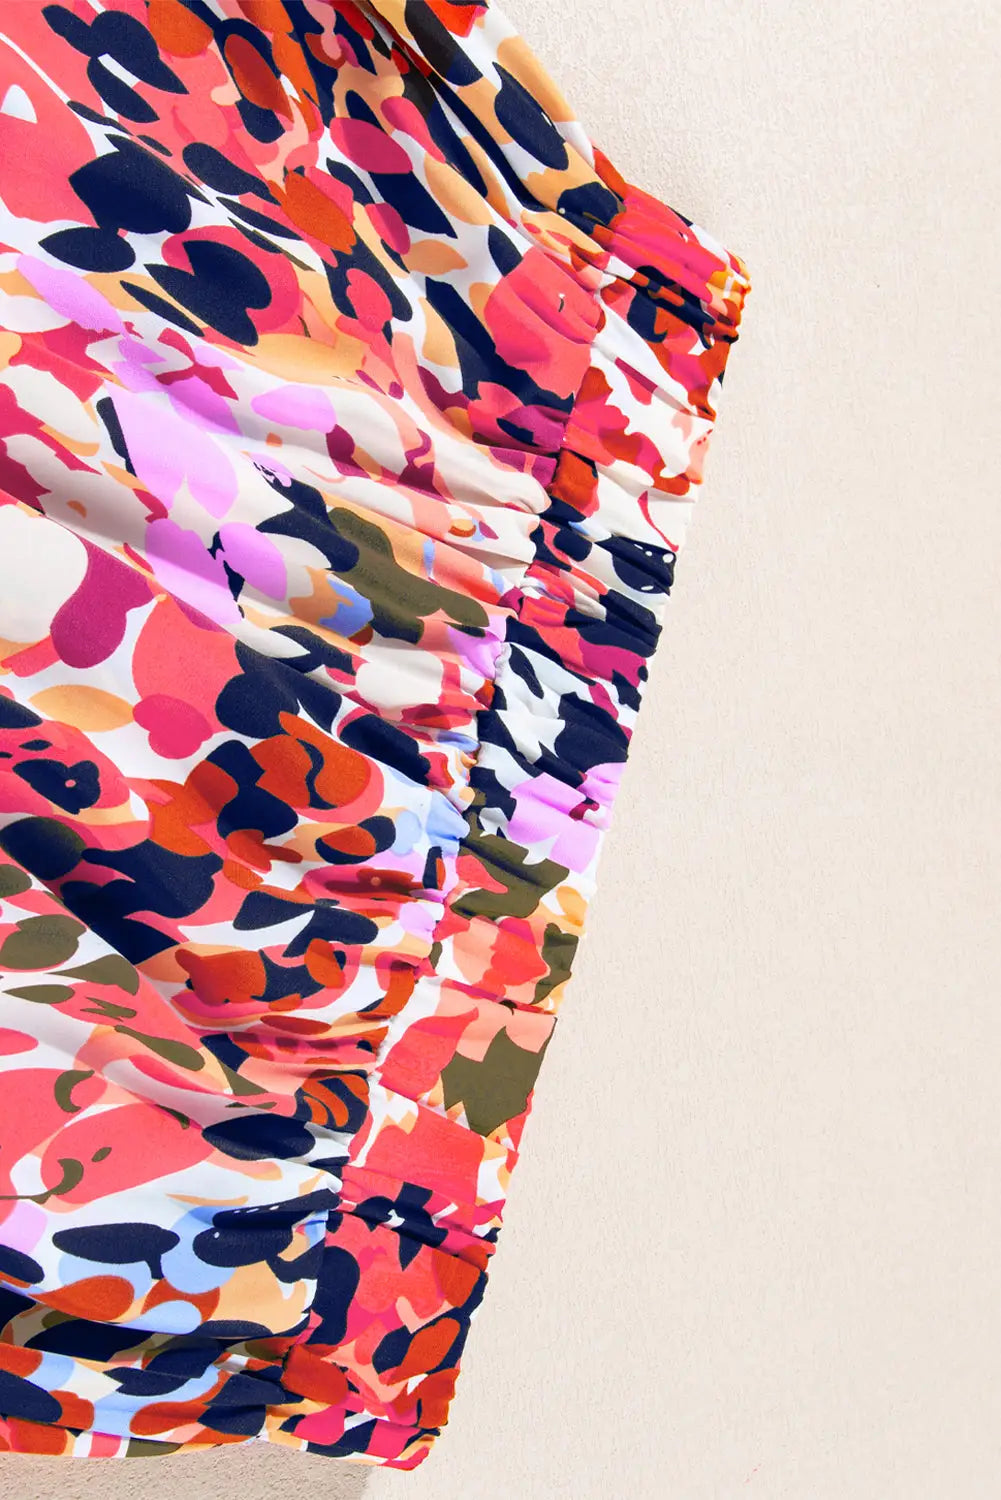 Abstract floral ruffled maxi skirt - skirts